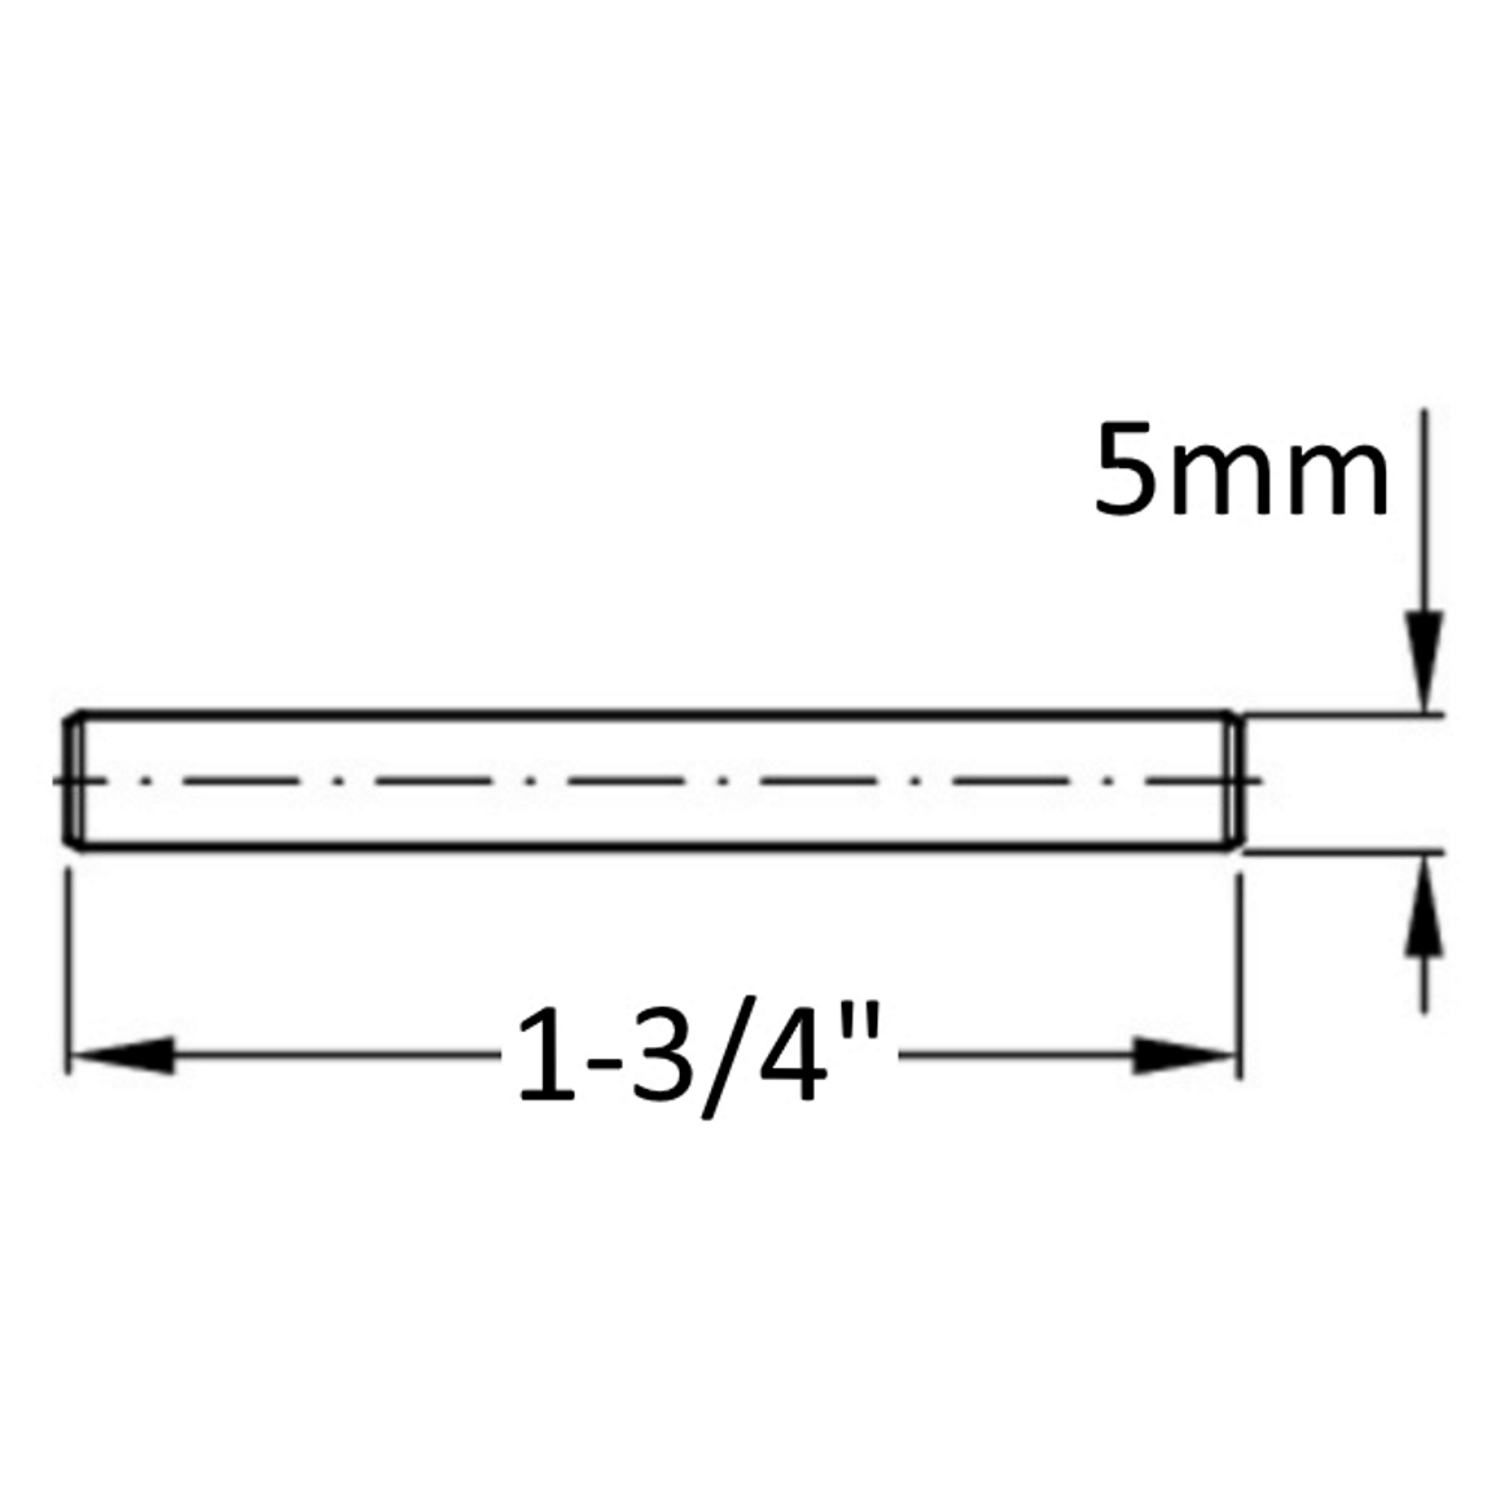 White Shelf Pegs/Shelf Supports 5mm 25 pack